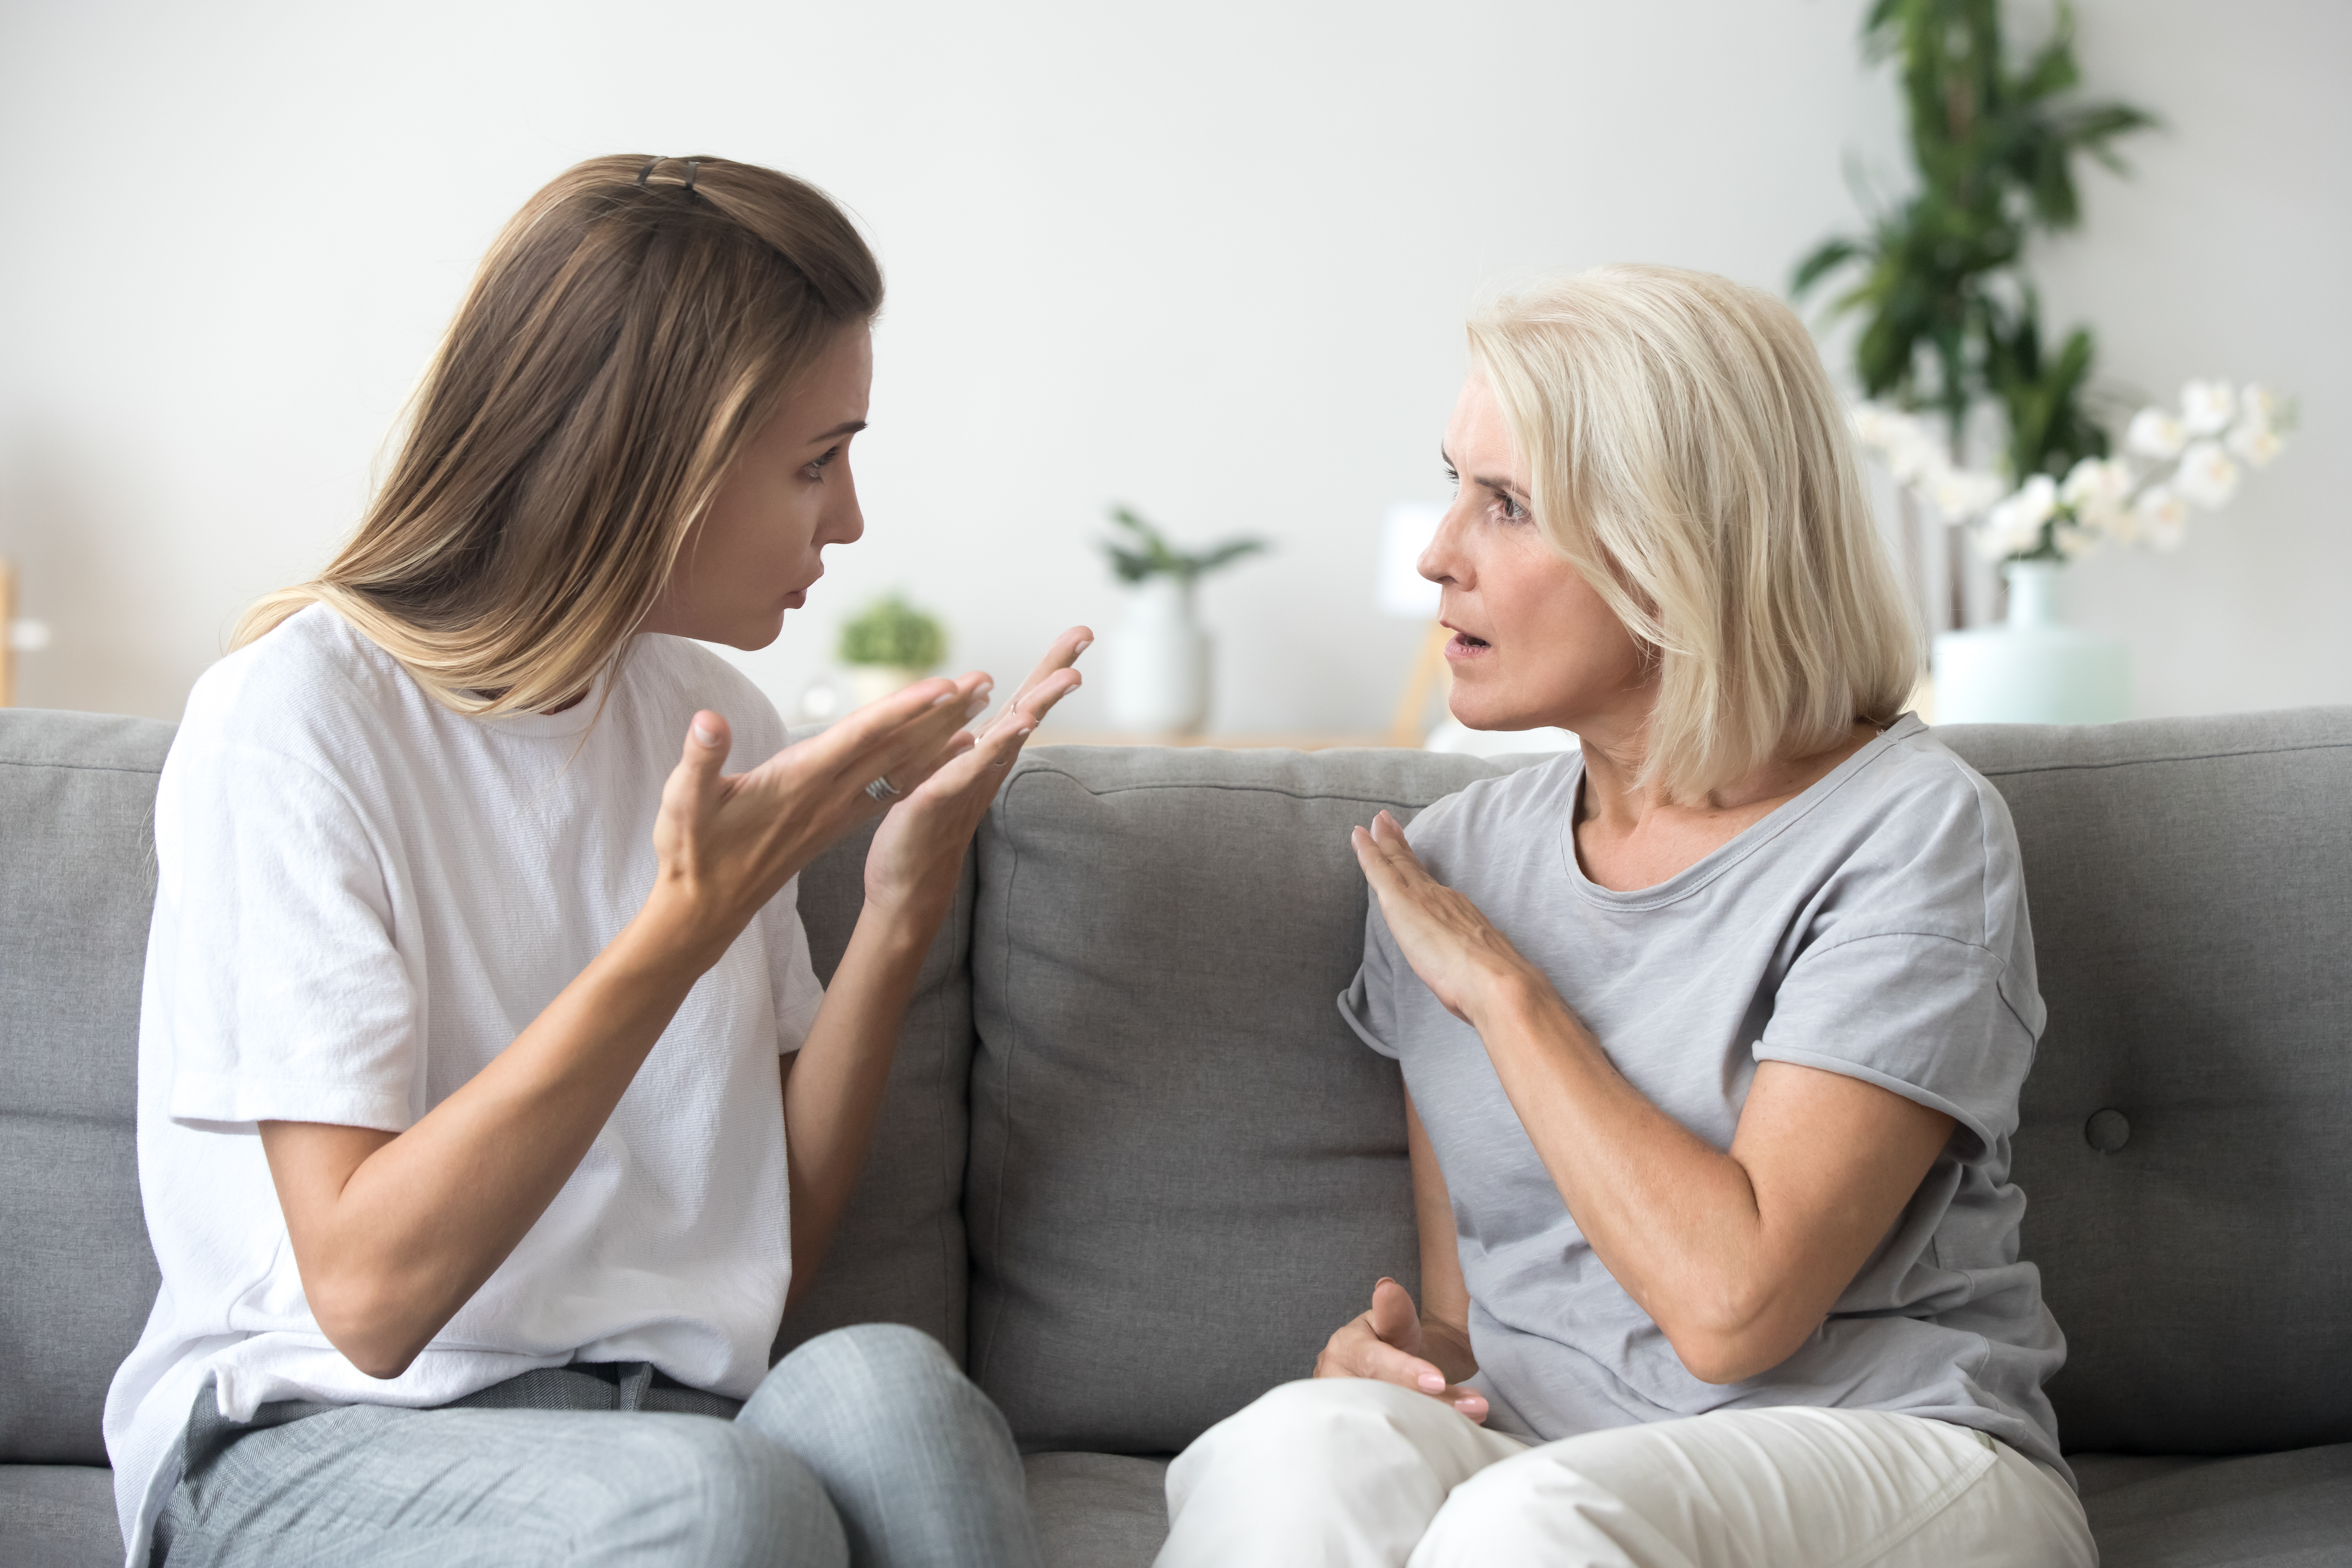 Two women arguing | Source: Shutterstock